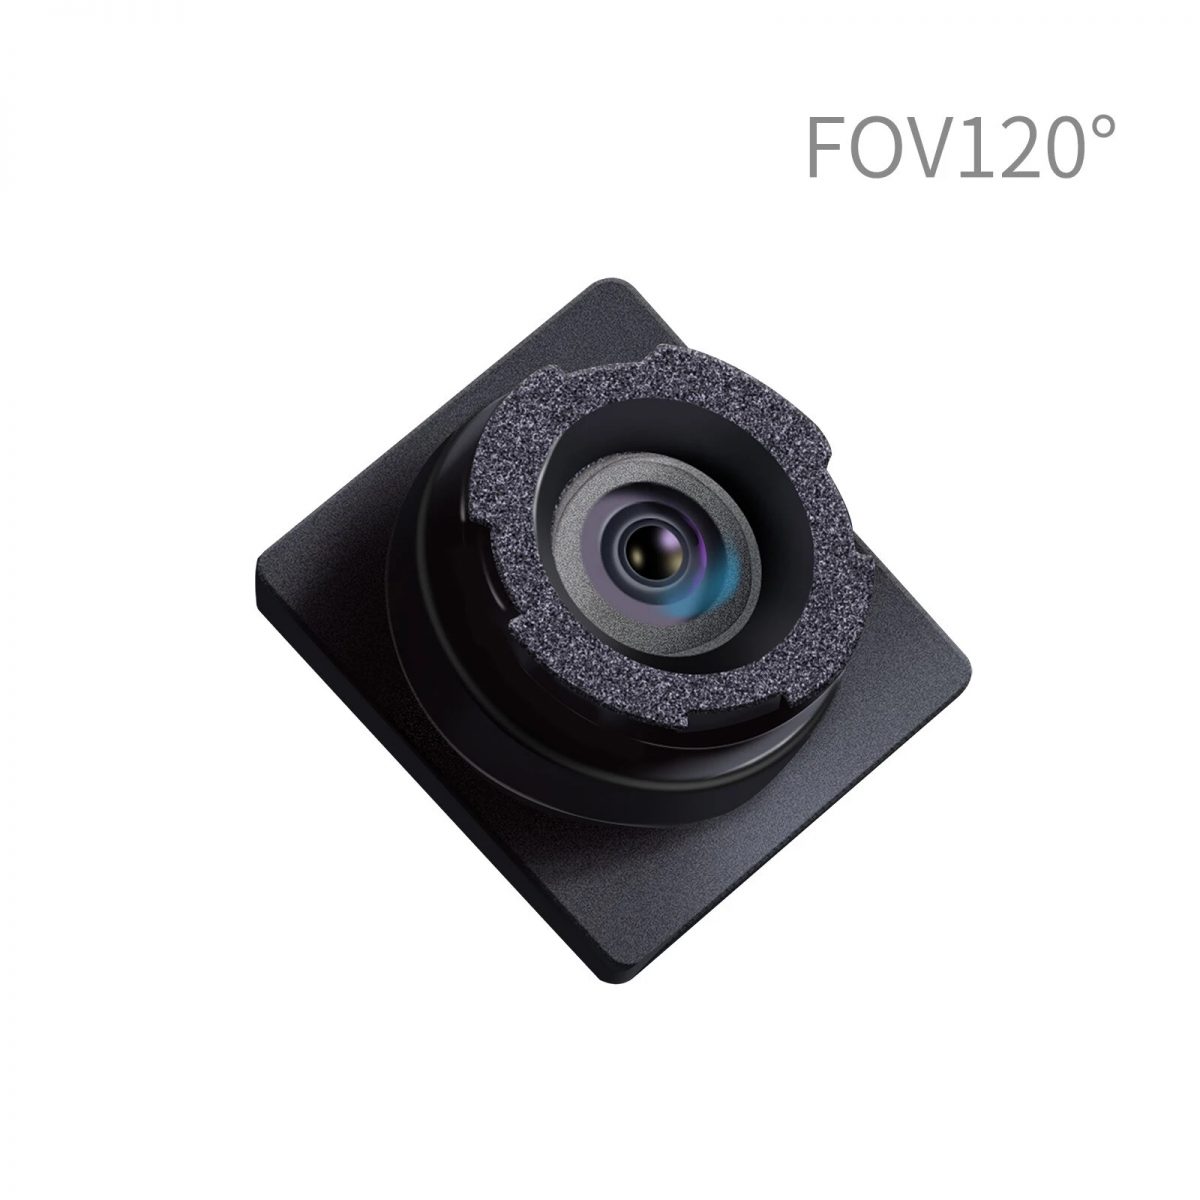 TX06 FPV Cam & Transmitter - Micro 700TVL 5.8Ghz